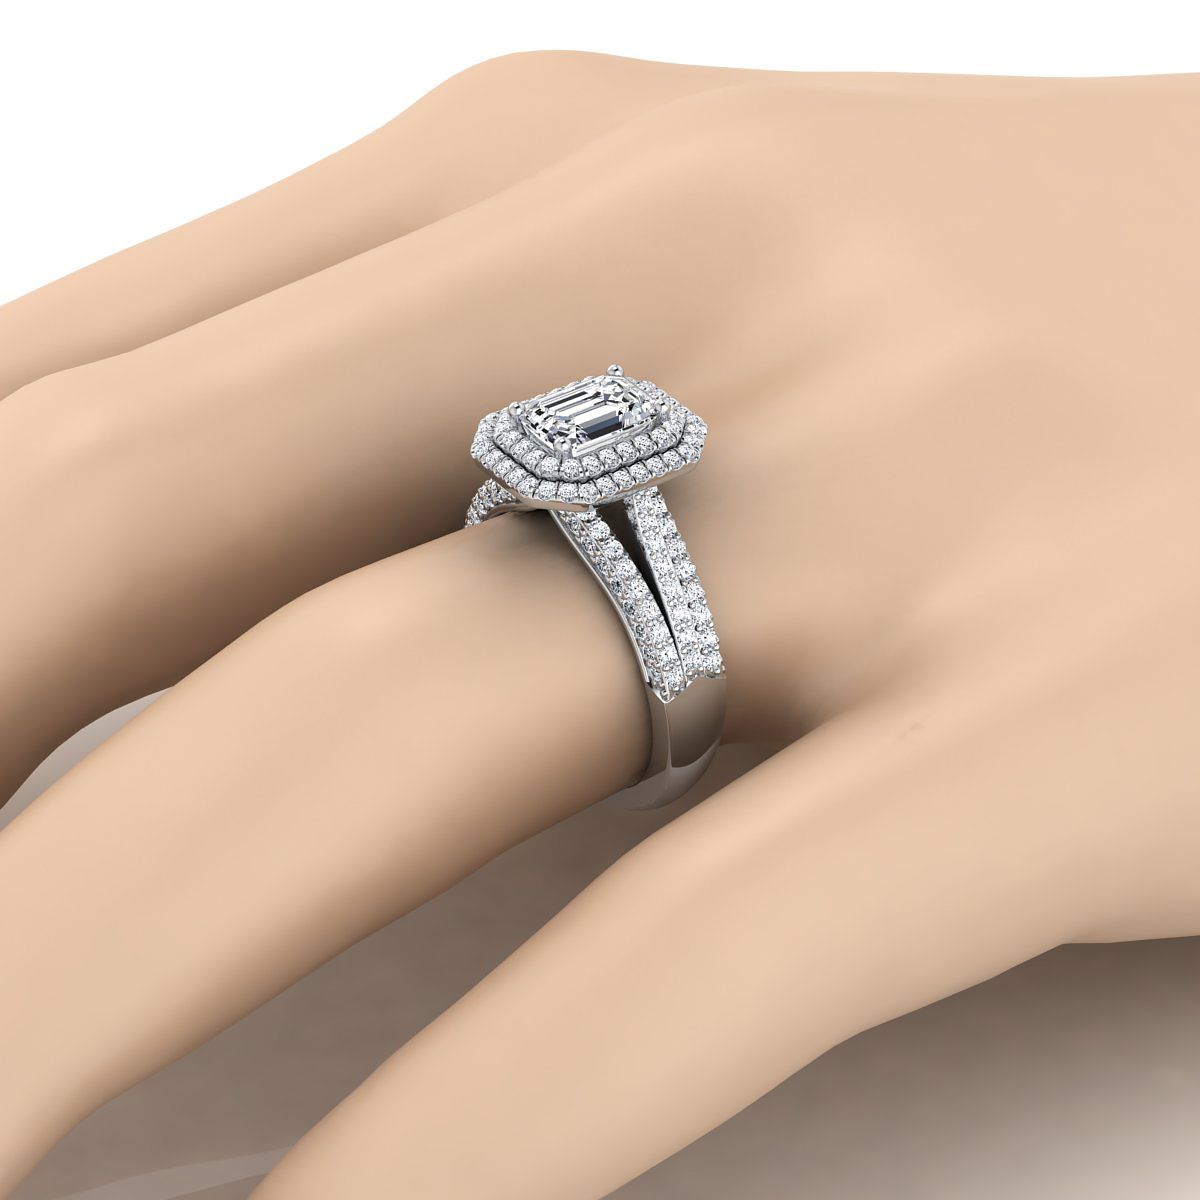 18K White Gold Emerald Cut Extraordinary Three Tier Diamond Halo Crown Engagement Ring -7/8ctw